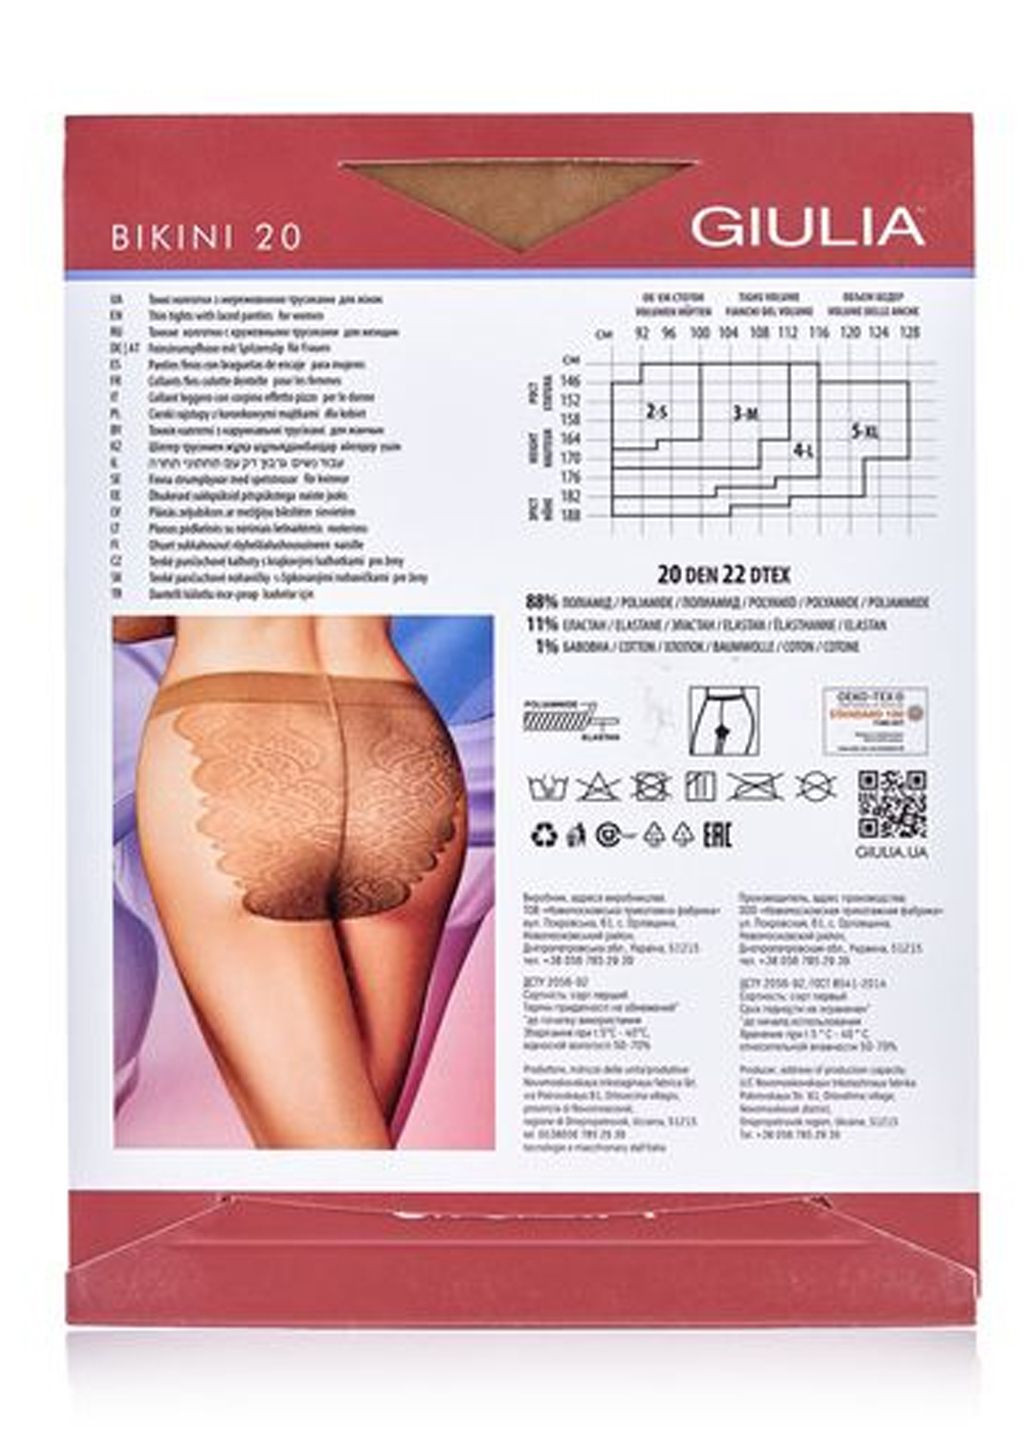 Колготки с ажурными трусиками den (daino-4) Giulia bikini 20 (279385802)